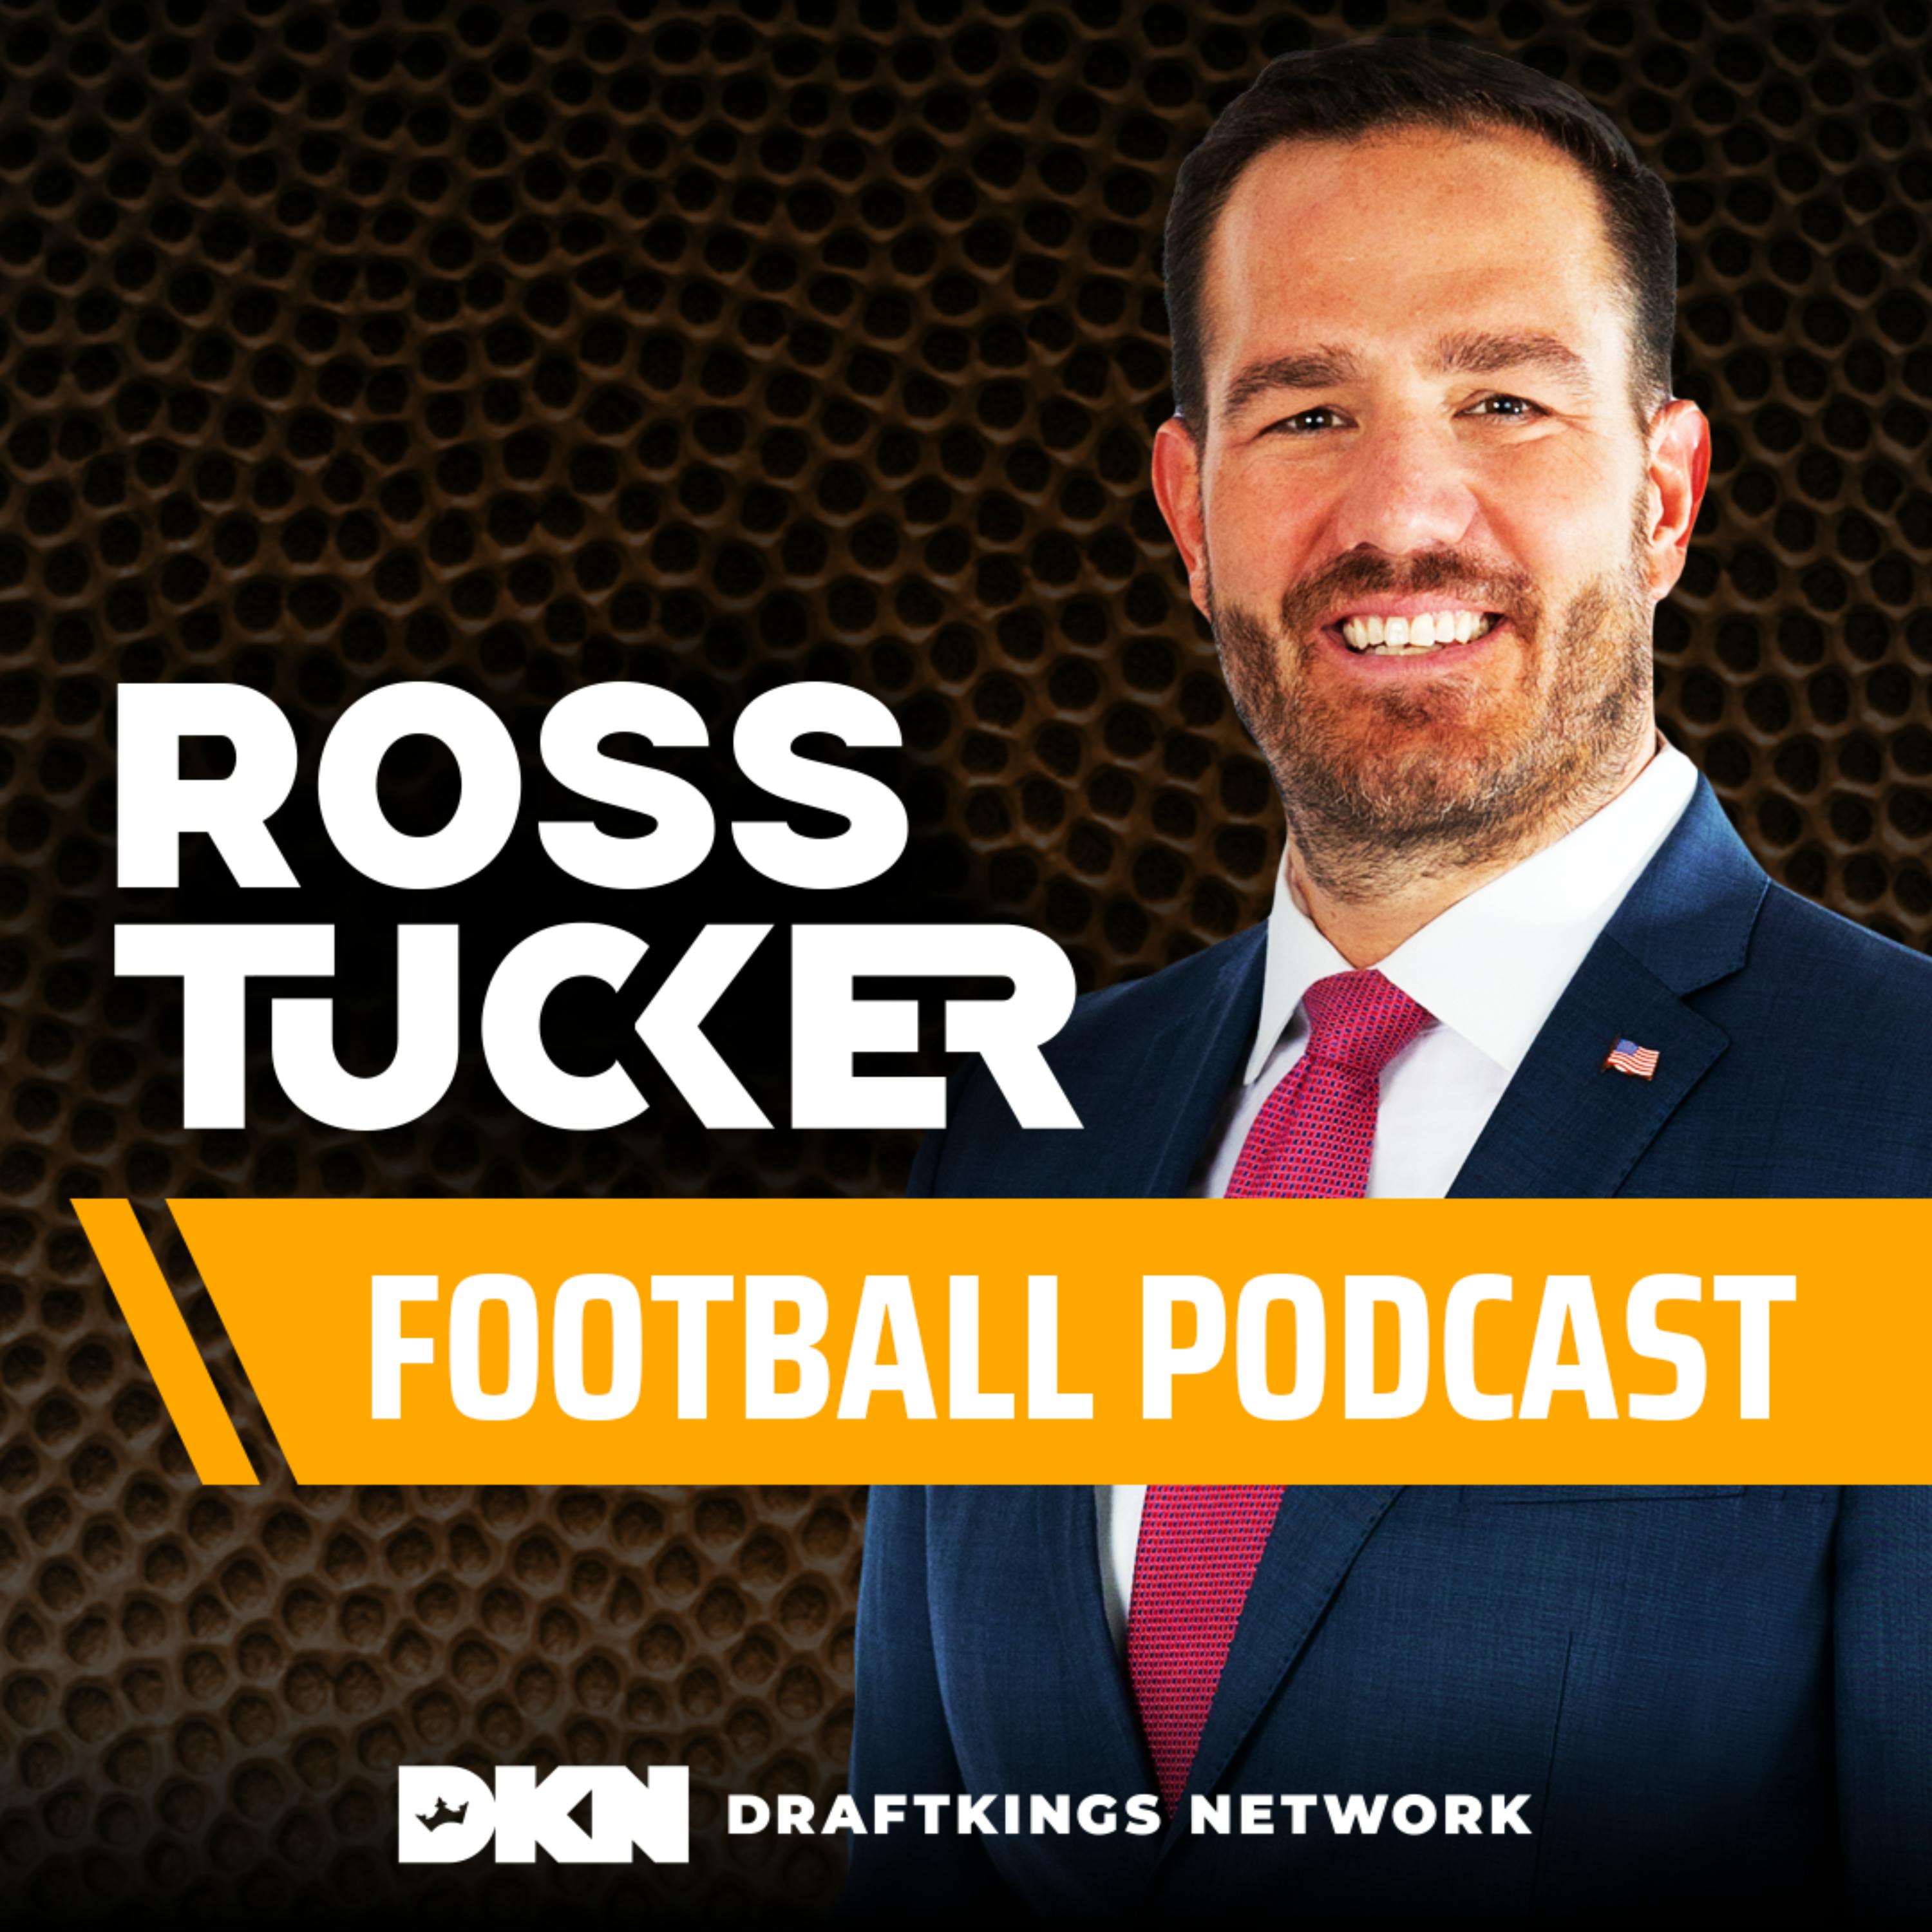 Ross Tucker Football Podcast: Daily NFL Podcast:NFL Football